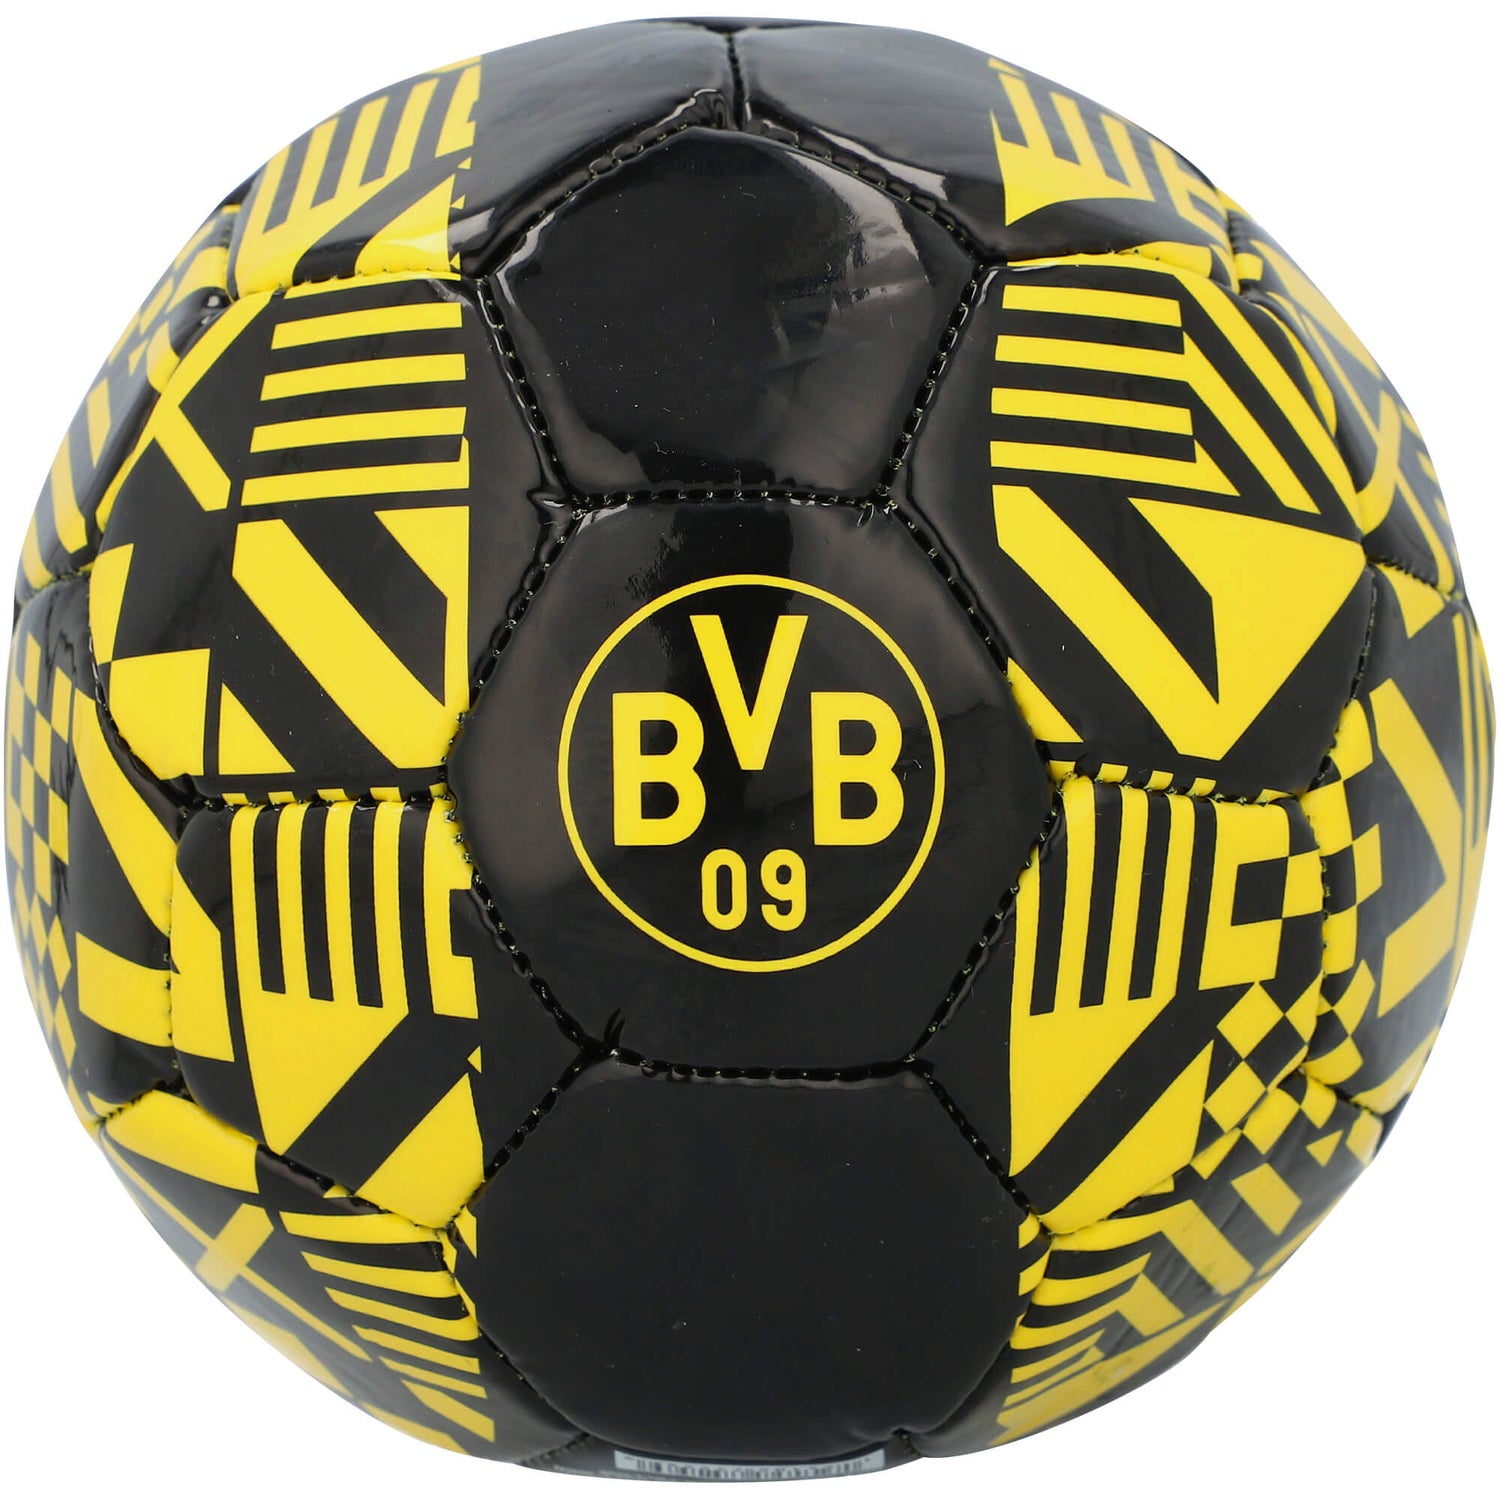 Puma Borussia Dortmund FtblCulture UBD Ball - Puma Black-Cyber Yellow (Front)